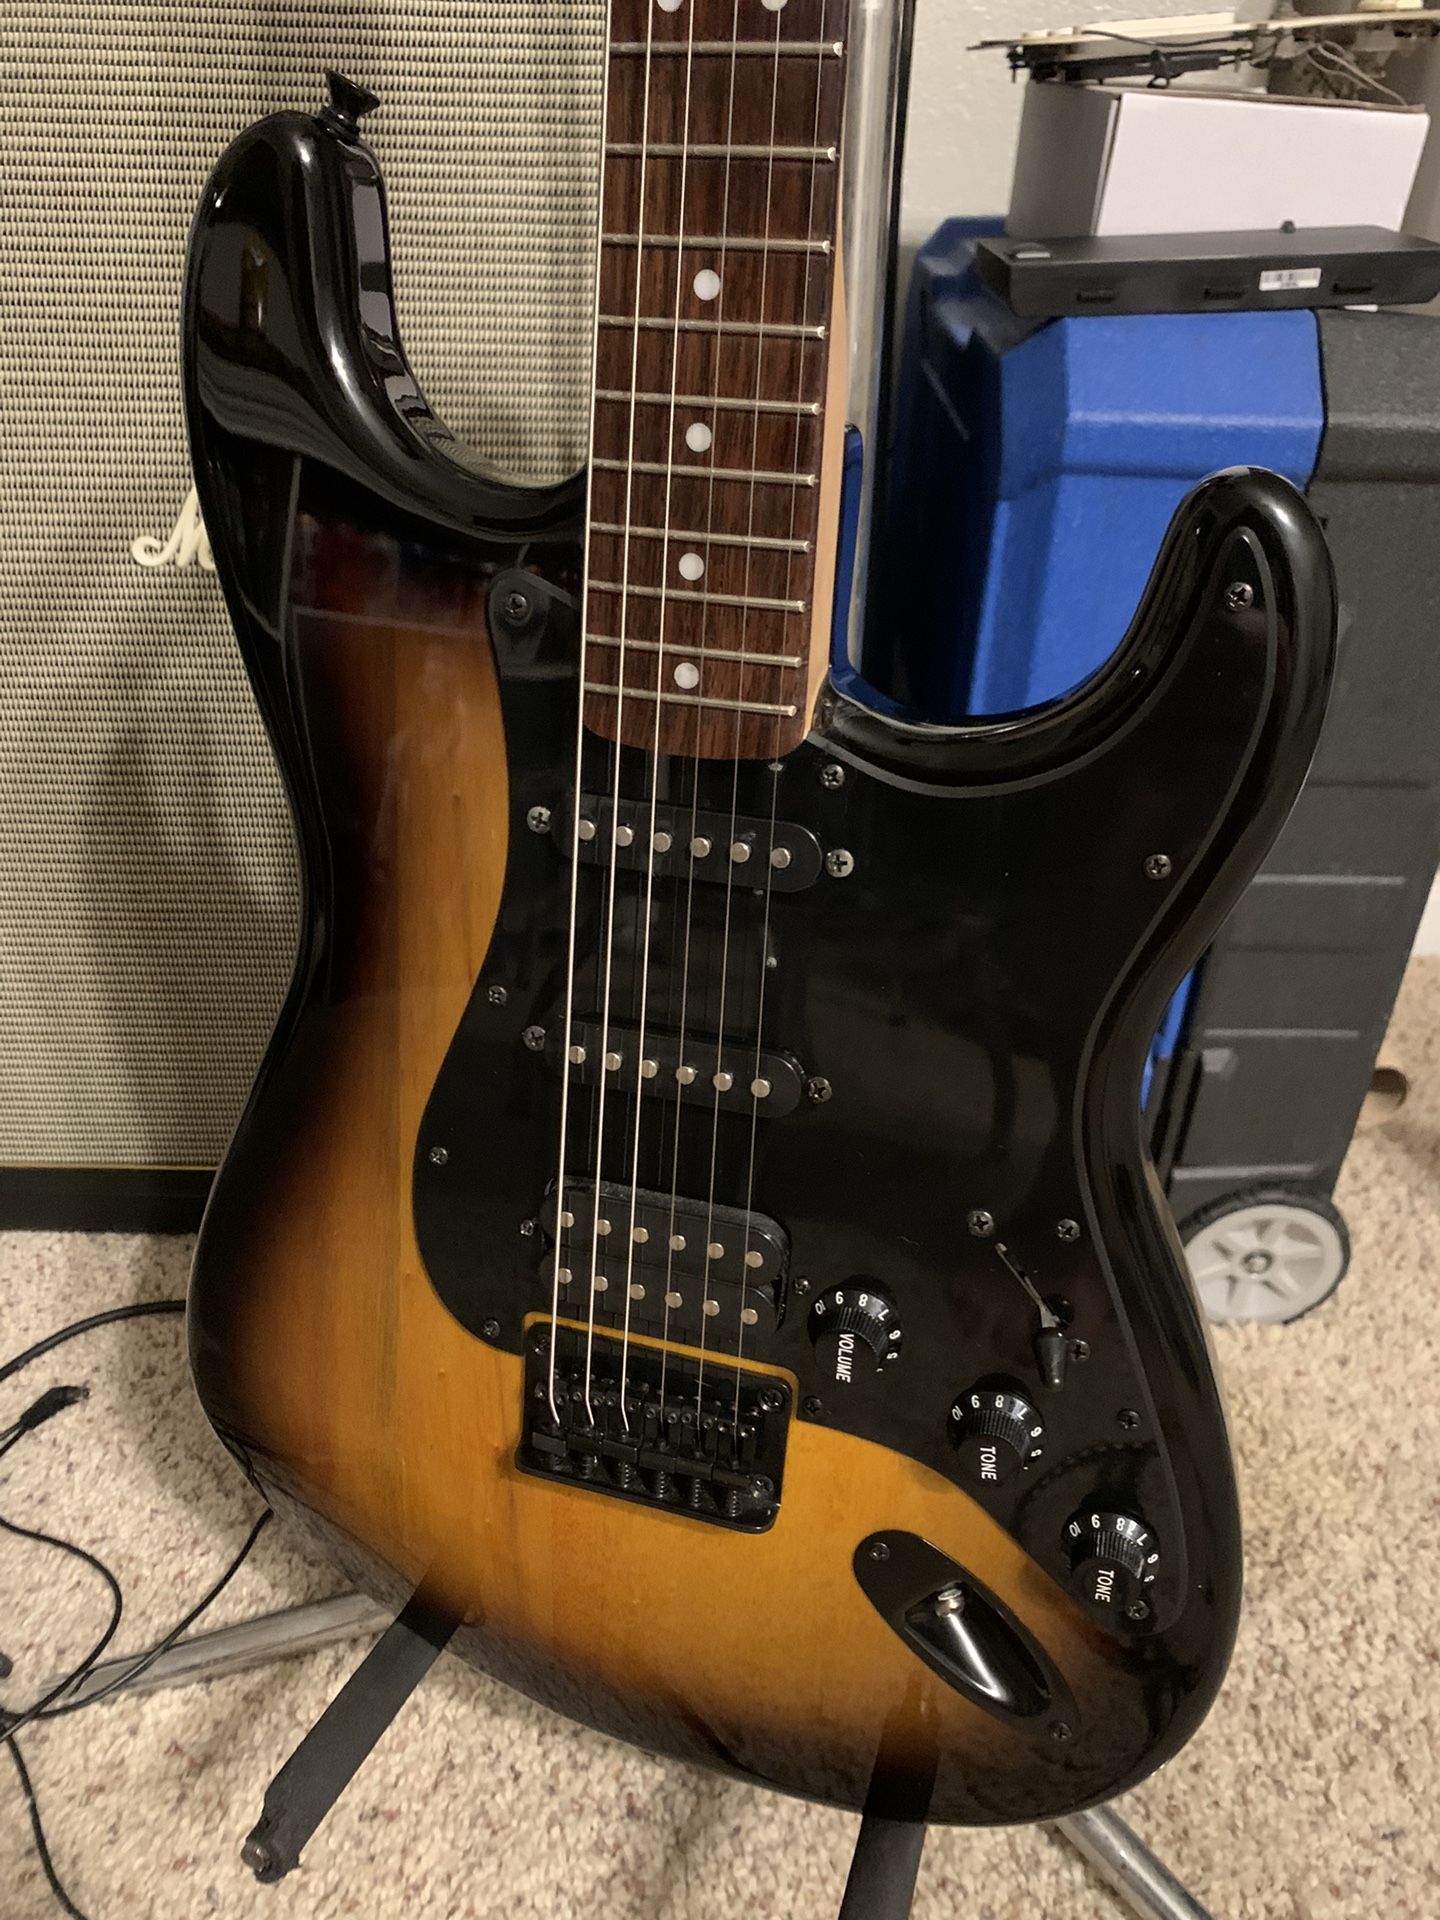 2022 Fender Squier HSS Stratocaster / Strat Electric Guitar - Humbucker! Hardtail Bridge!